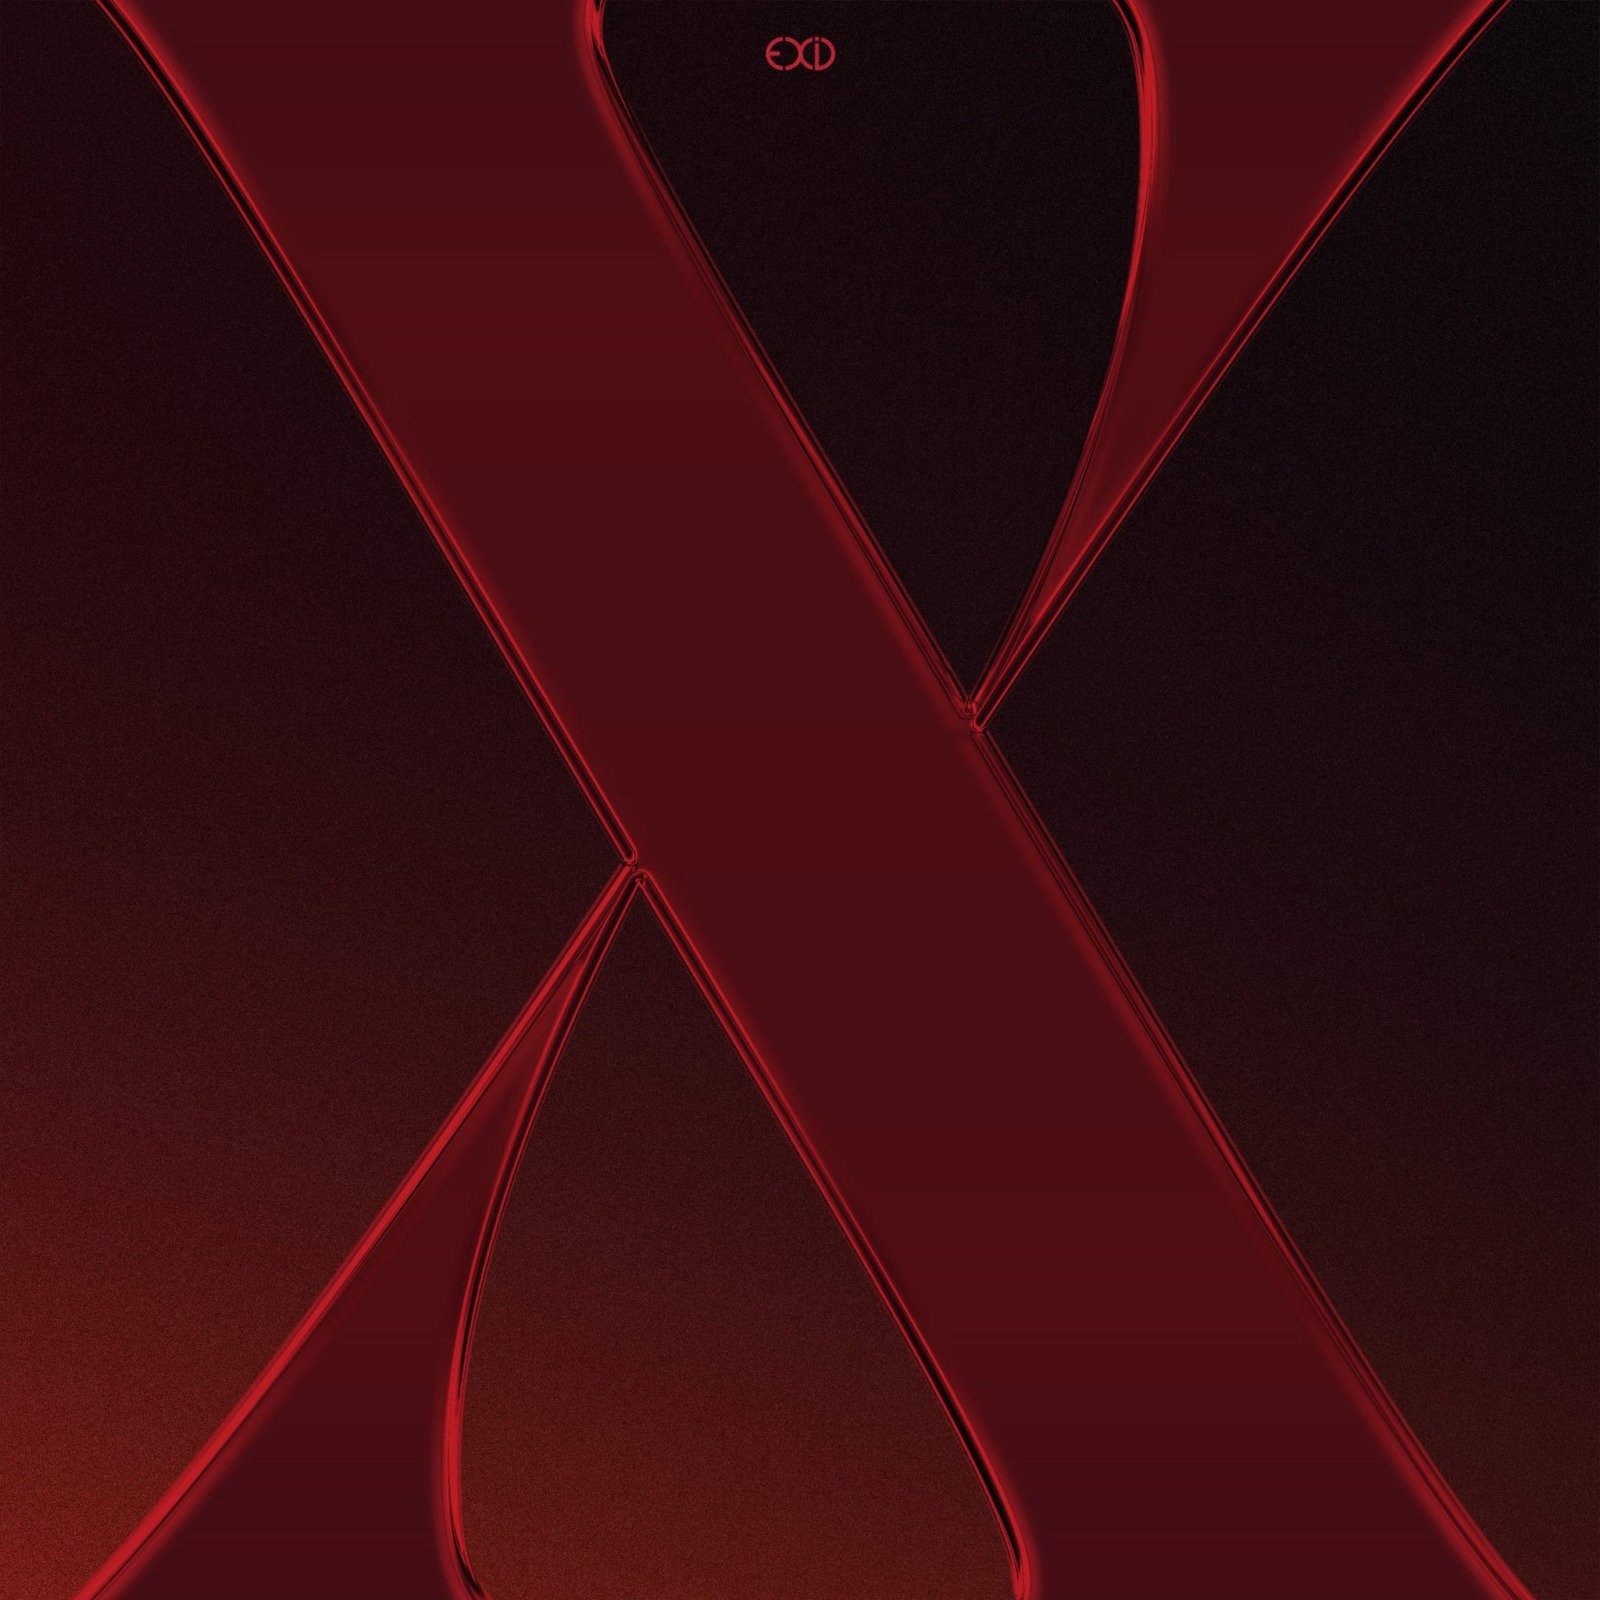 EXID 10th Anniversary SINGLE ALBUM「X」 「FIRE (불이나)」